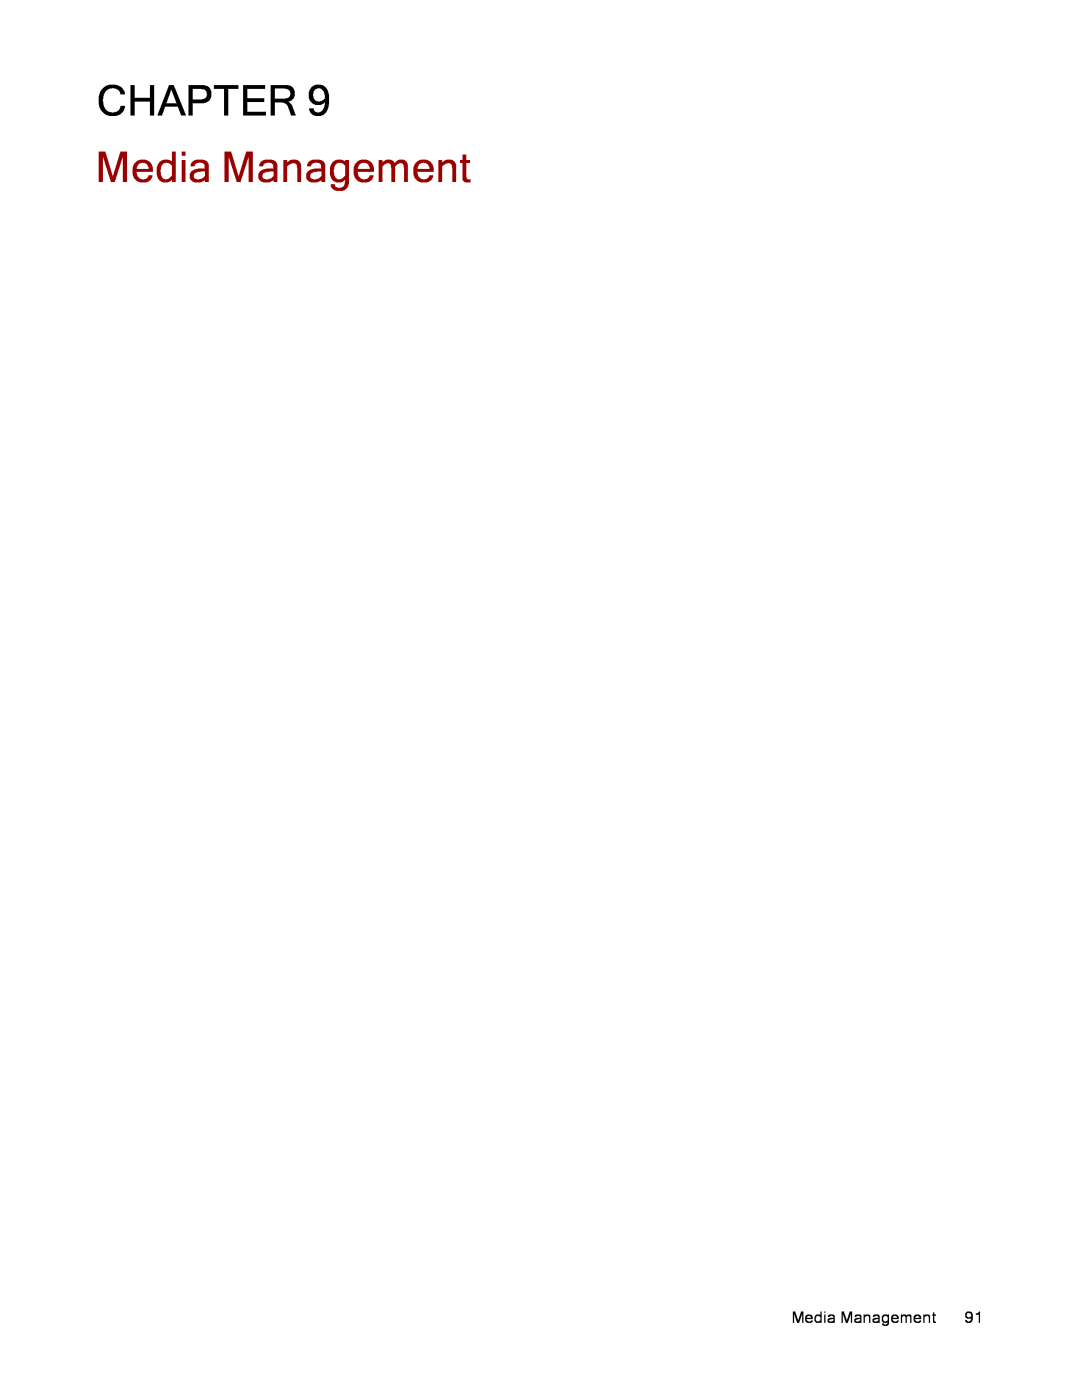 Lenovo 70B89000NA, 70B89003NA, 70B89001NA manual Media Management, Chapter 